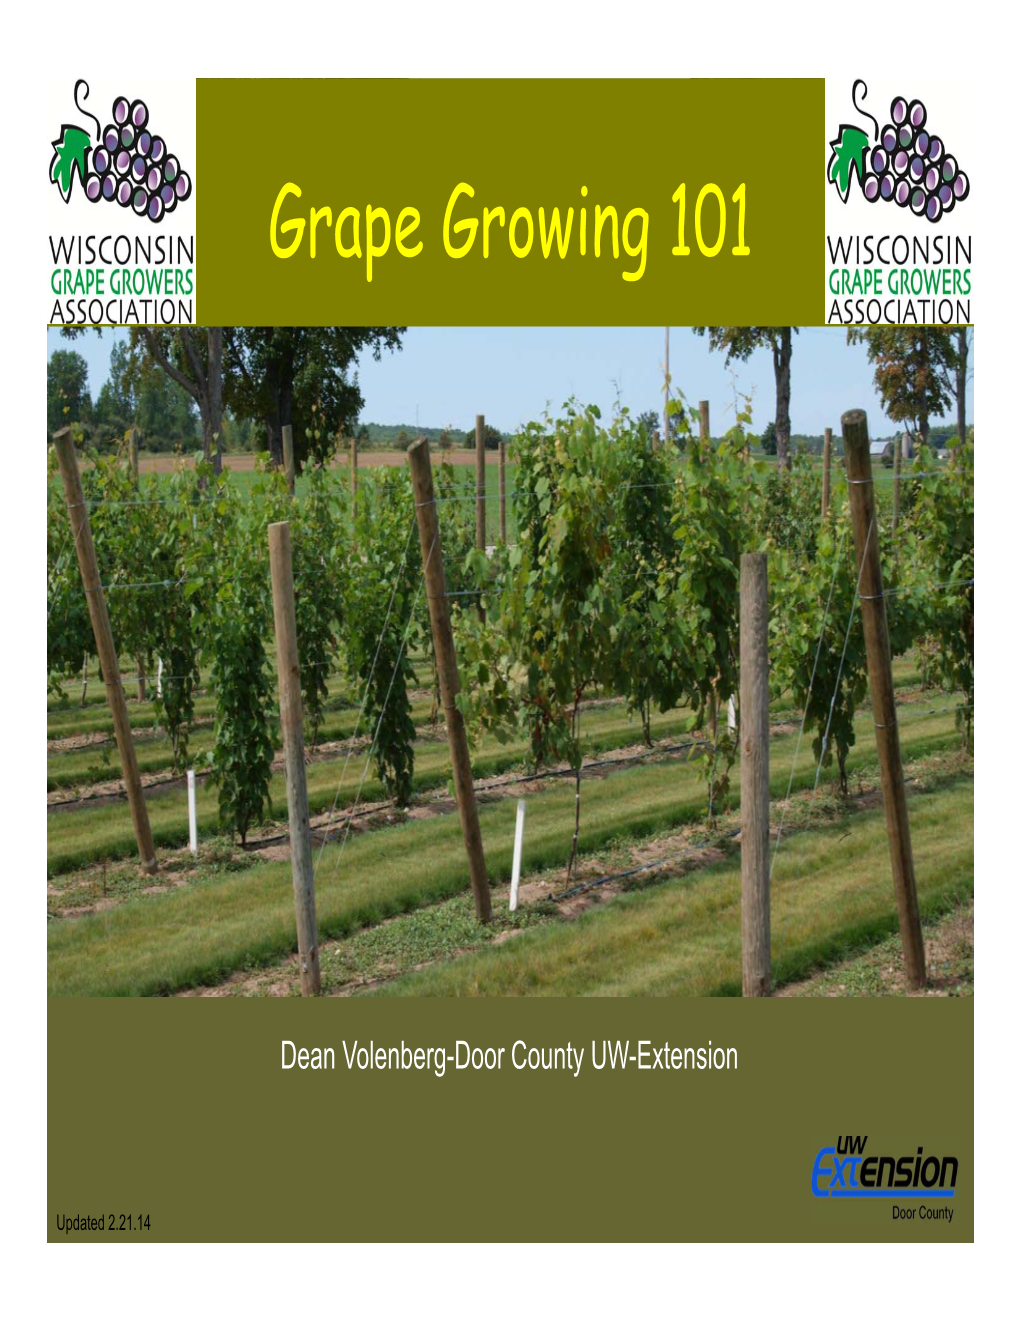 Growing Grapes 101 Presentation Handout